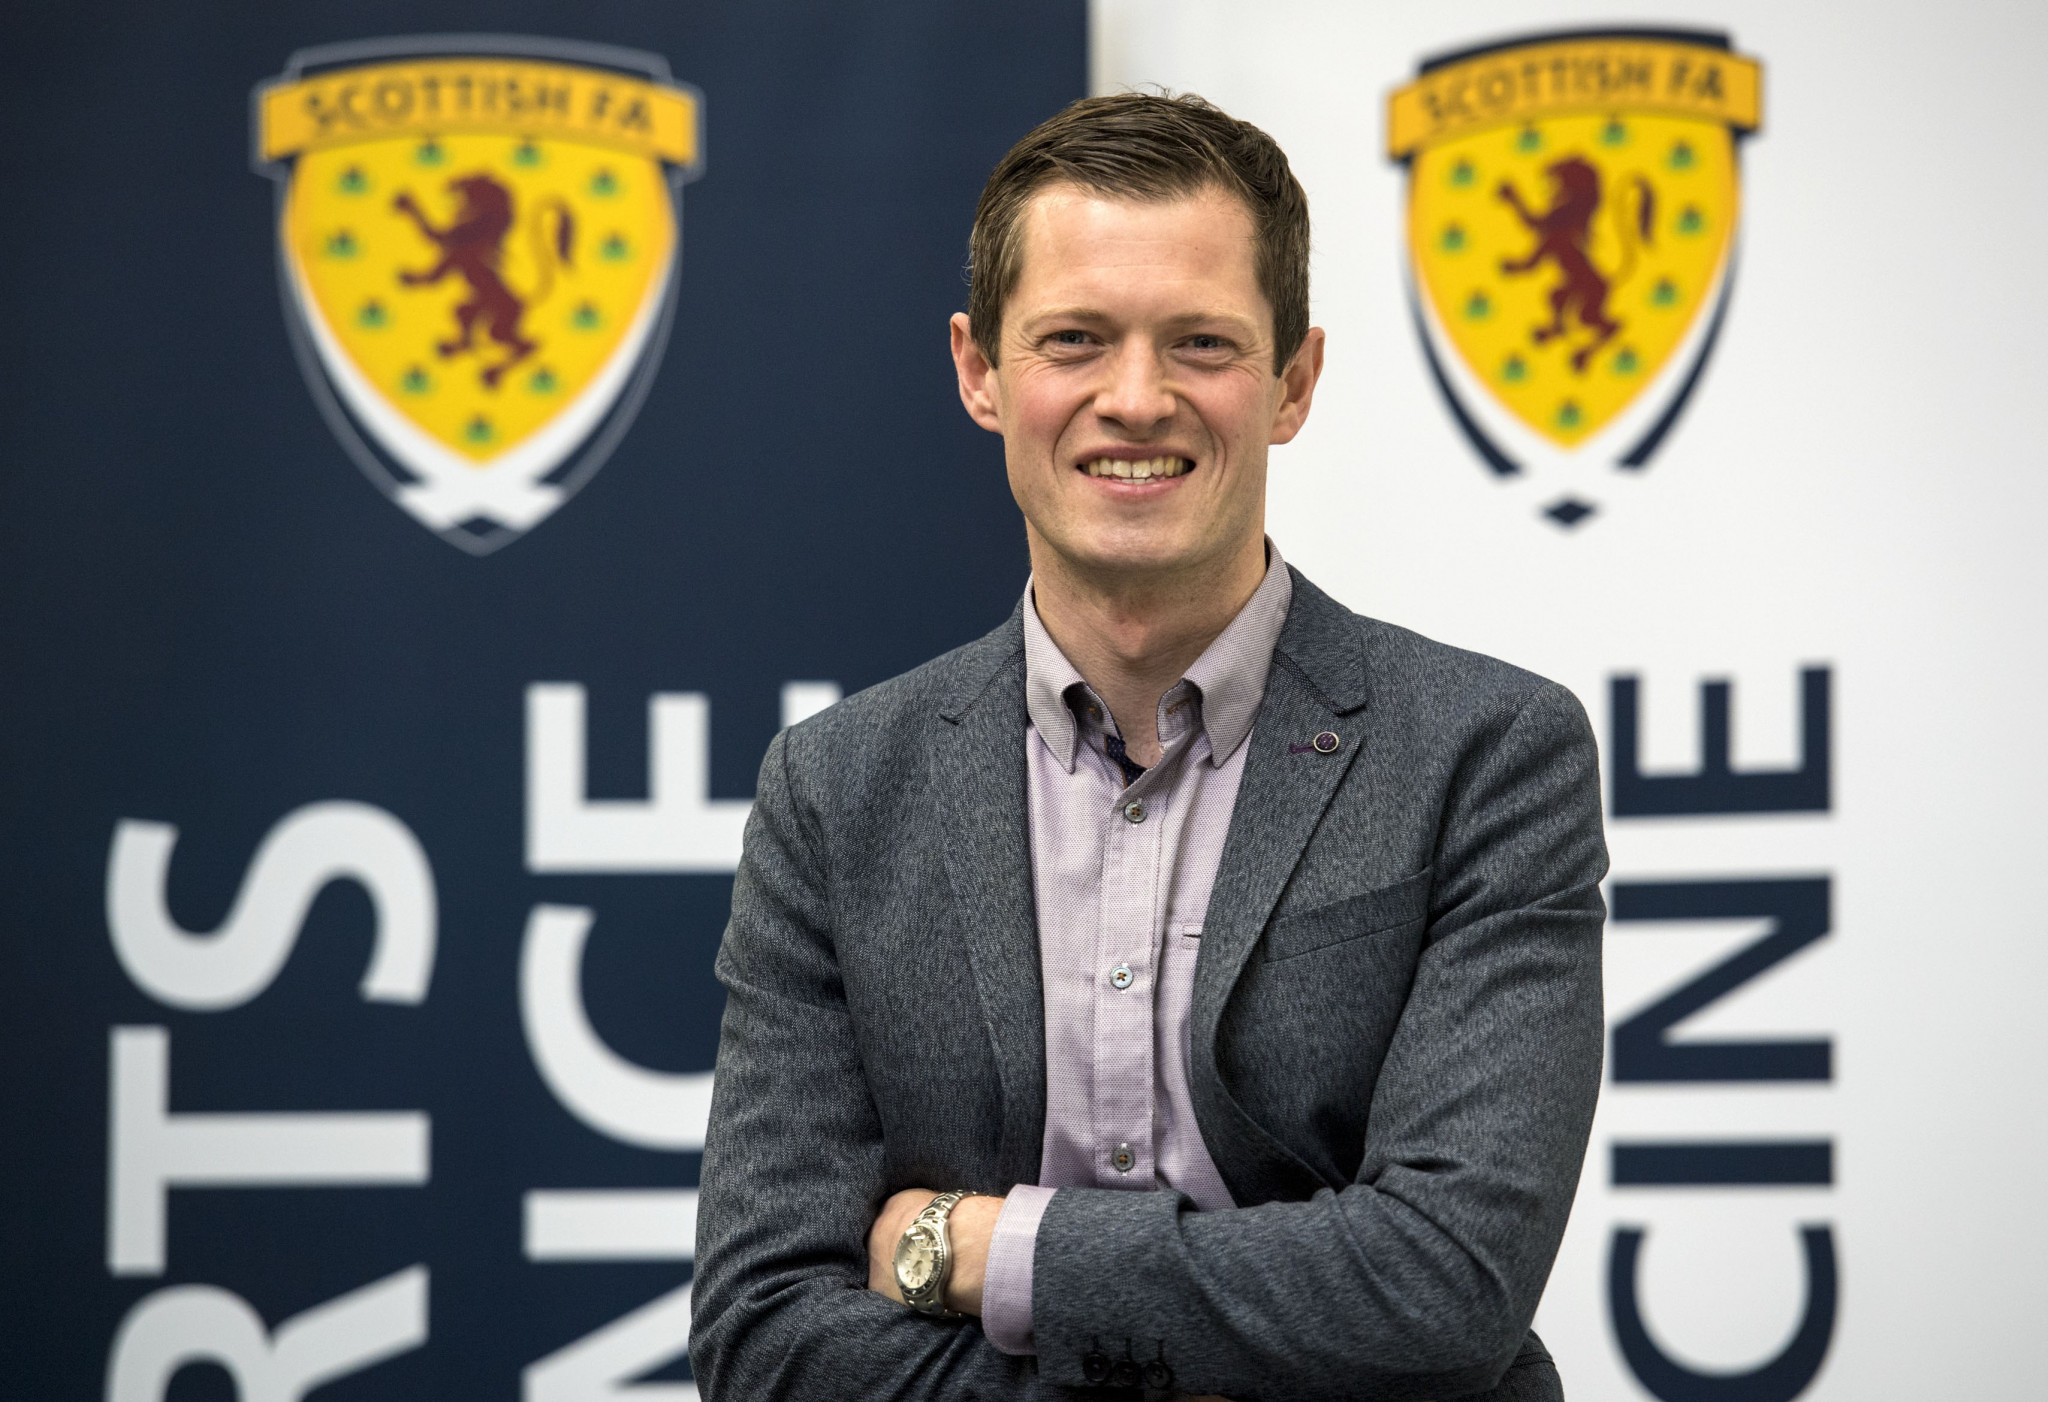 Scottish Squash confirms non-executive director Board appointments